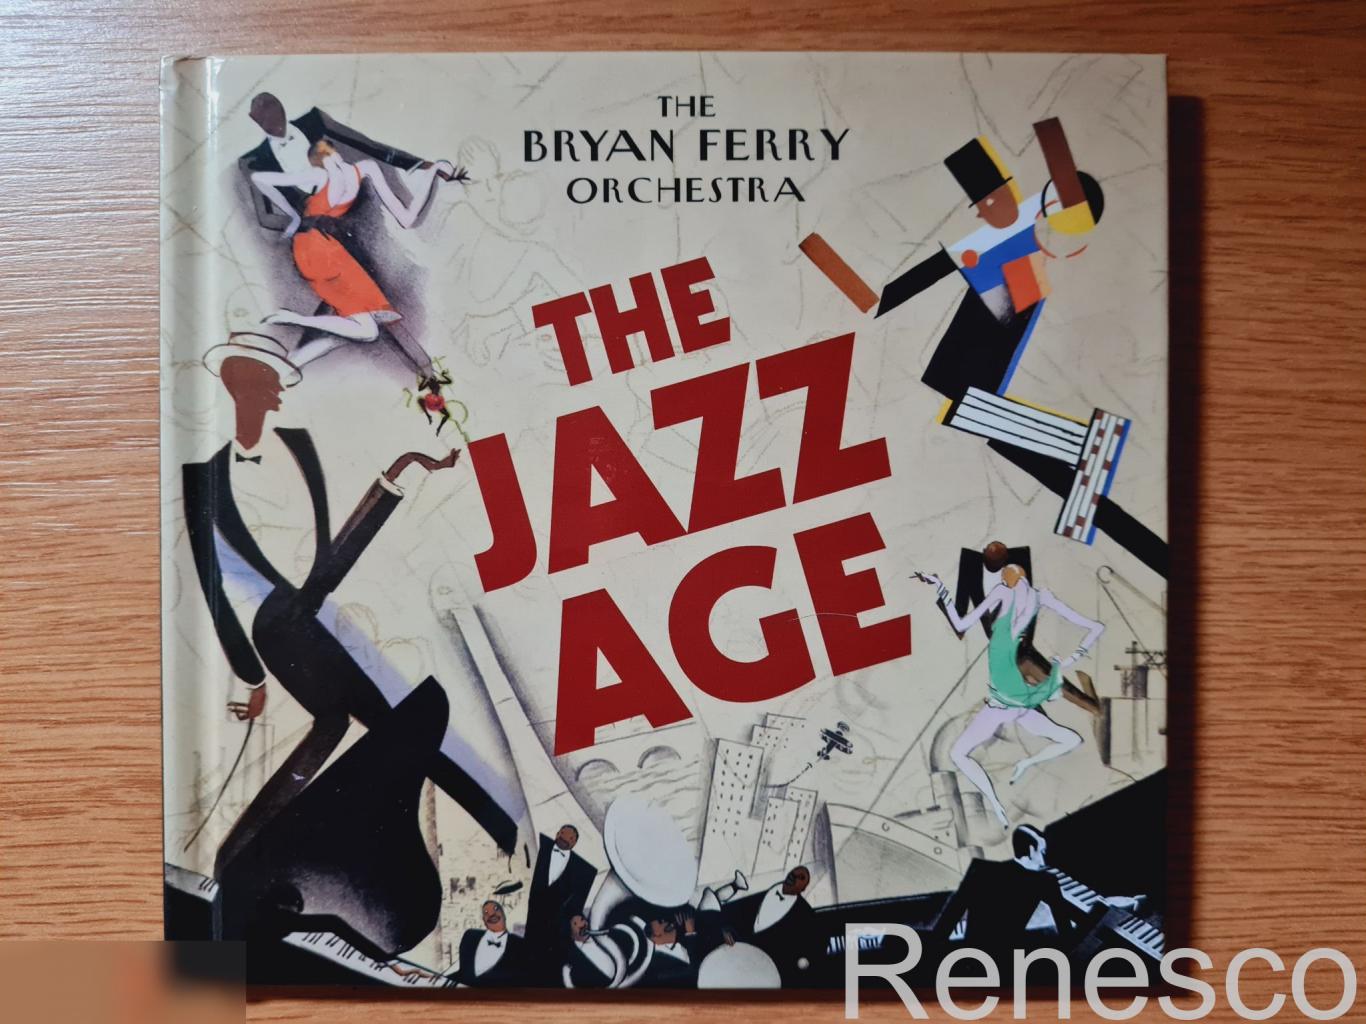 The Bryan Ferry Orchestra – The Jazz Age (UK) (2012) (hardback book)